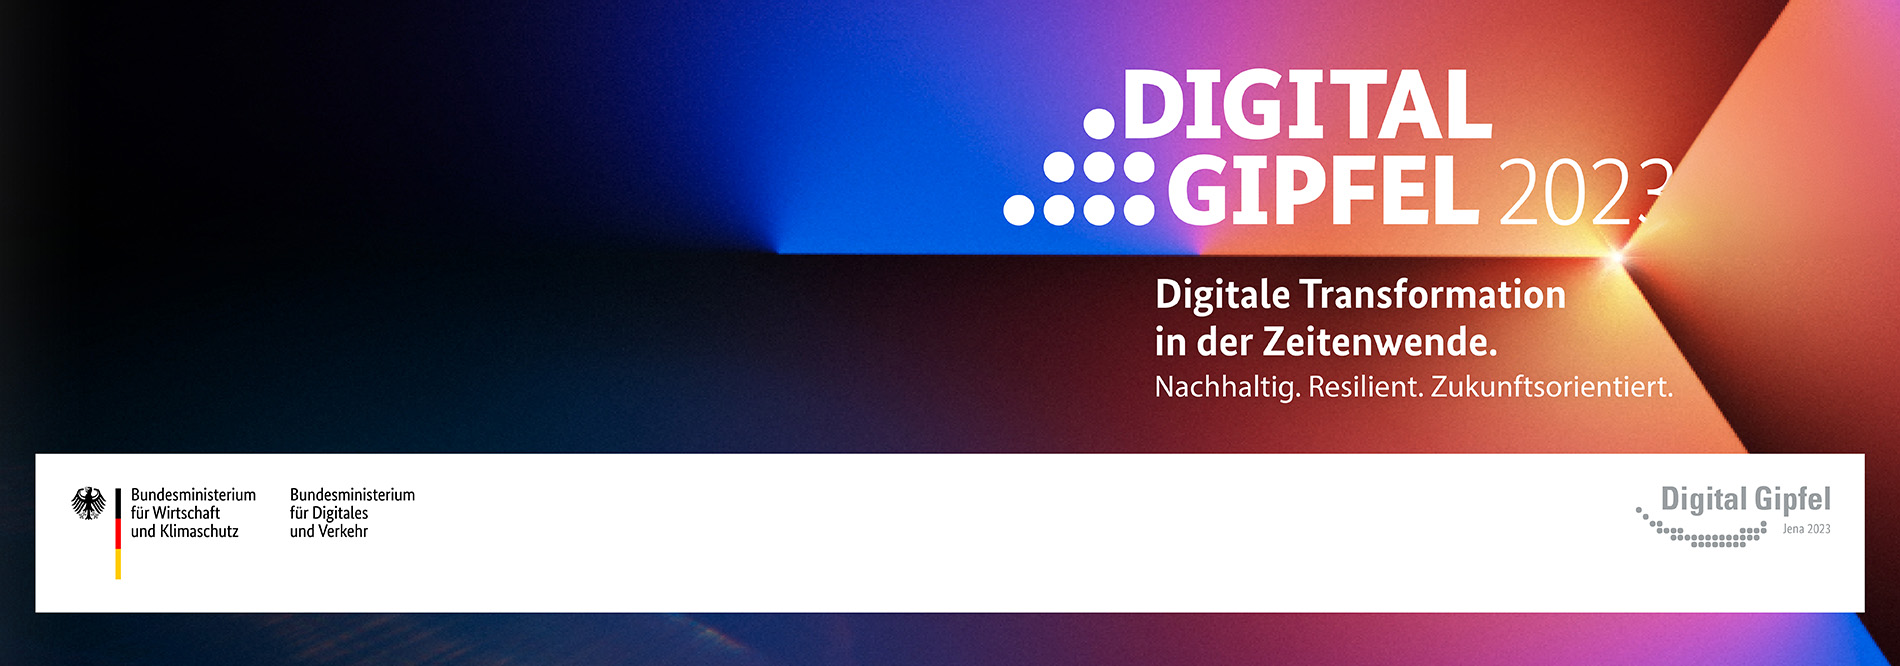 Digital Gipfels 2023 Copyright: JenaKultur, Jürgen Scheere